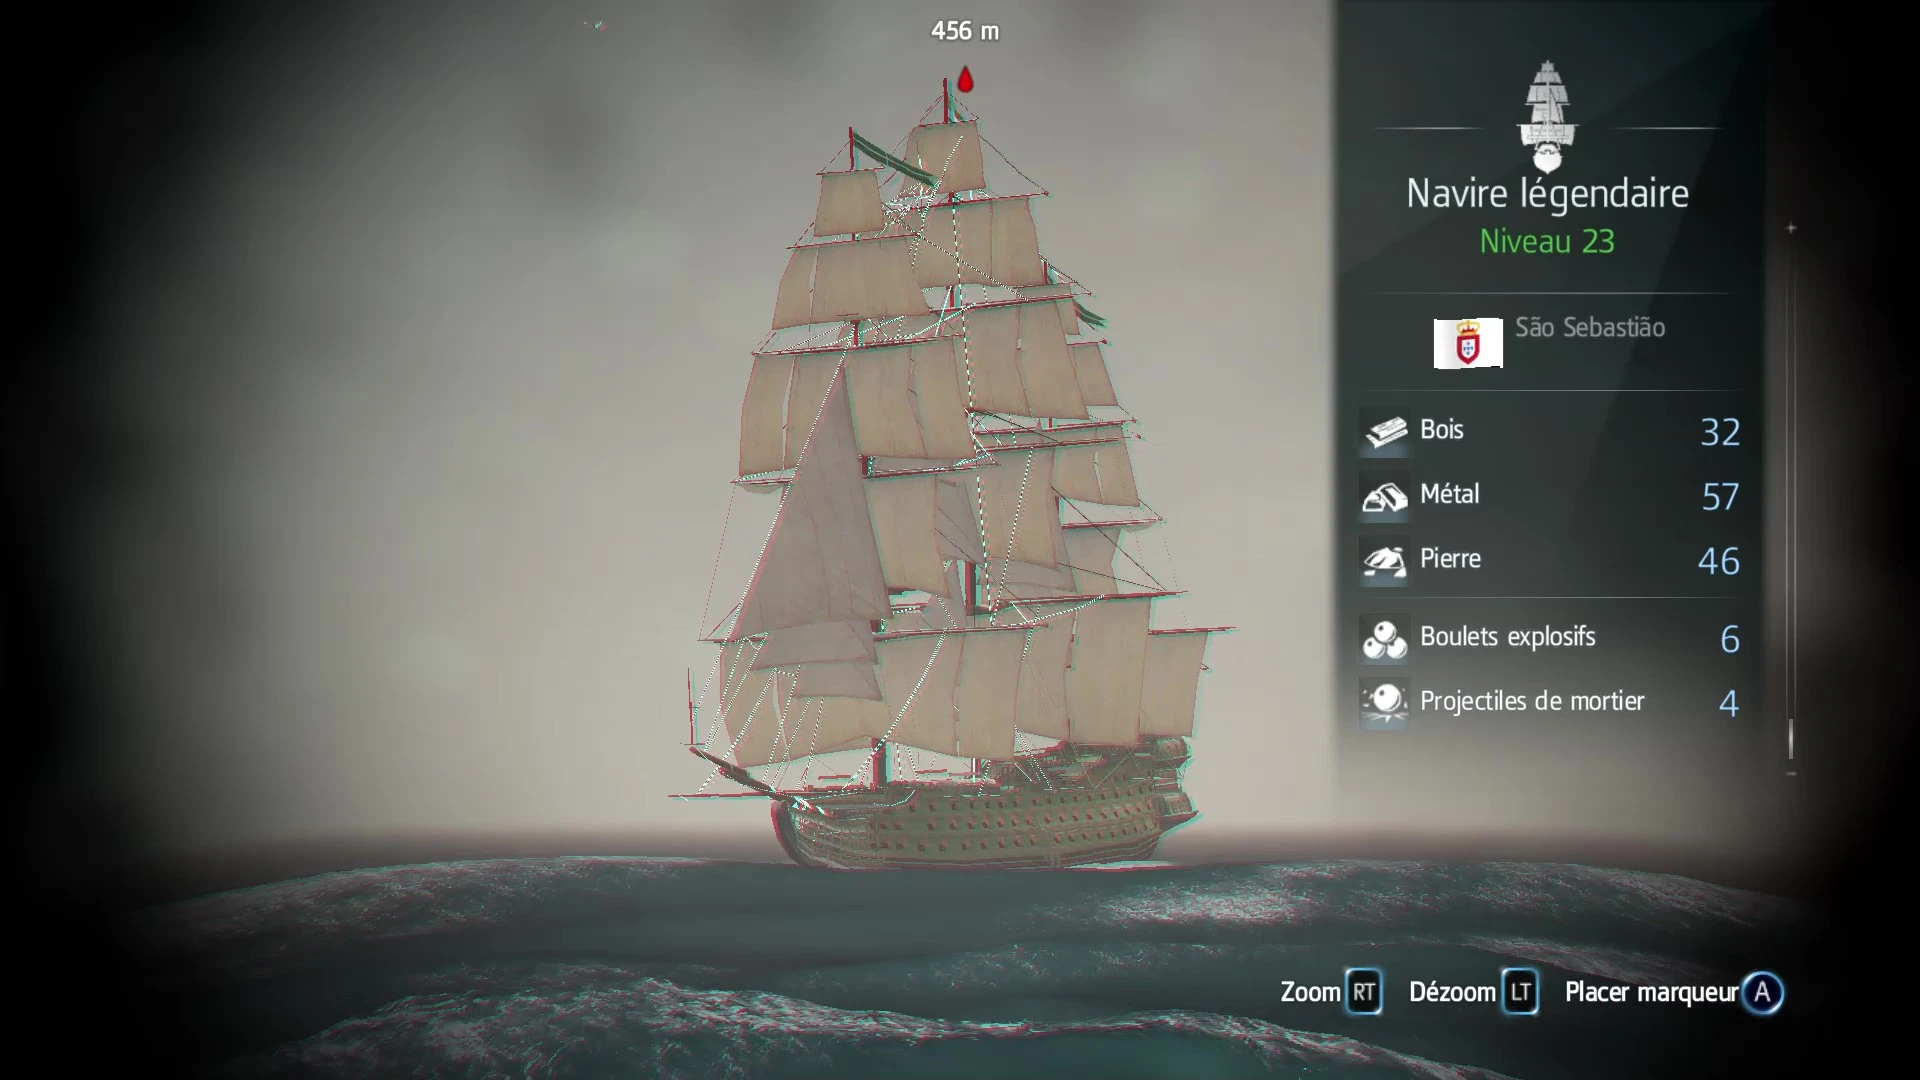 Assassins Creed: Rogue Nexus - Mods and community